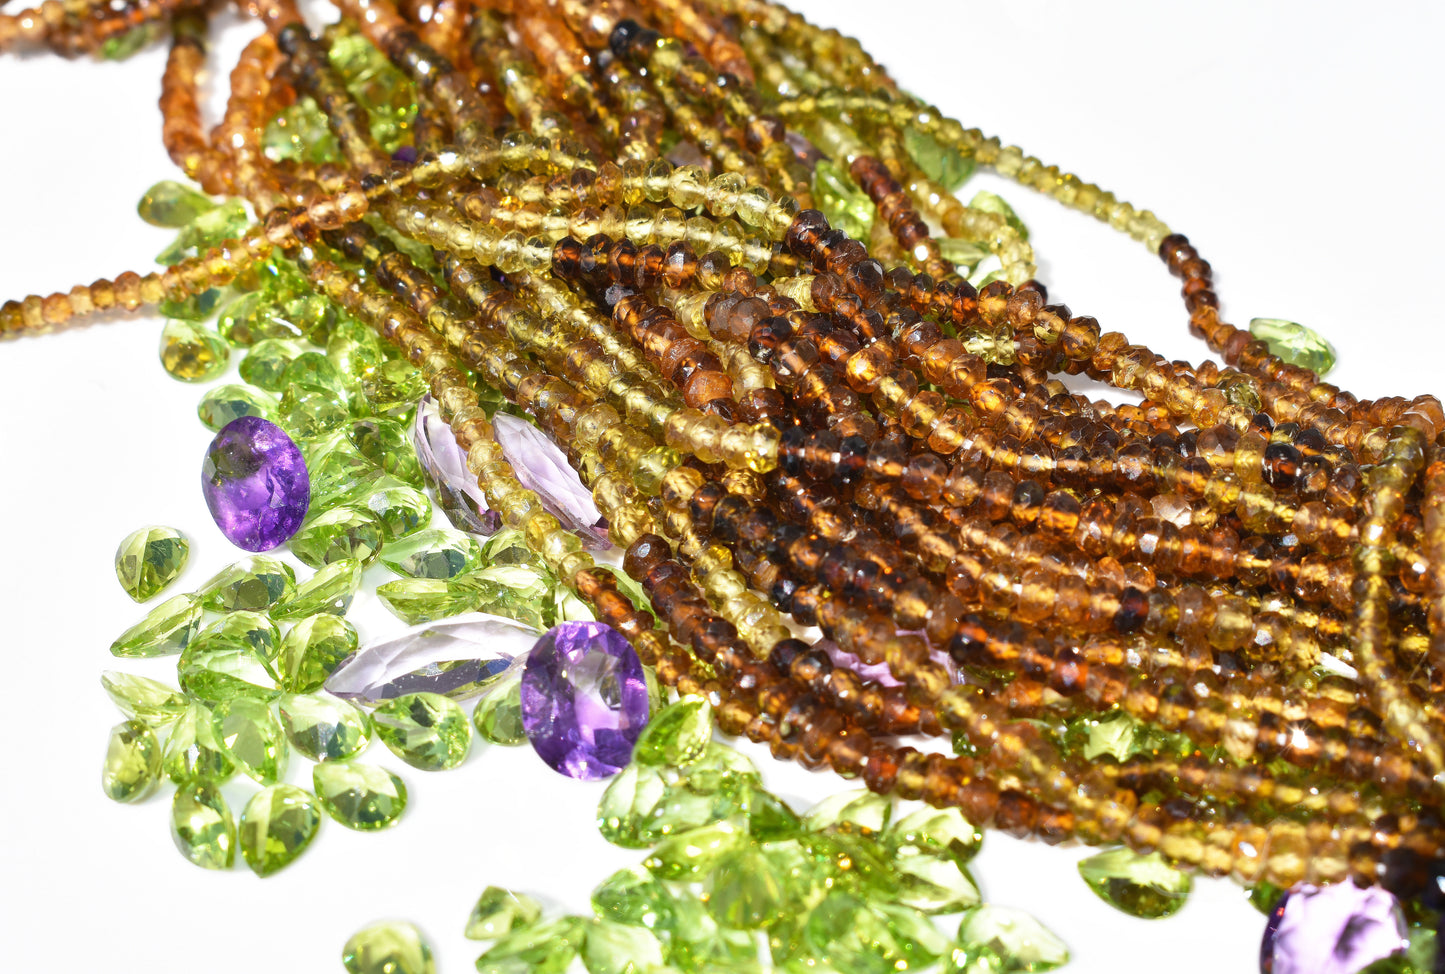 Petro Tourmaline Rondelle Beads 2-3mm